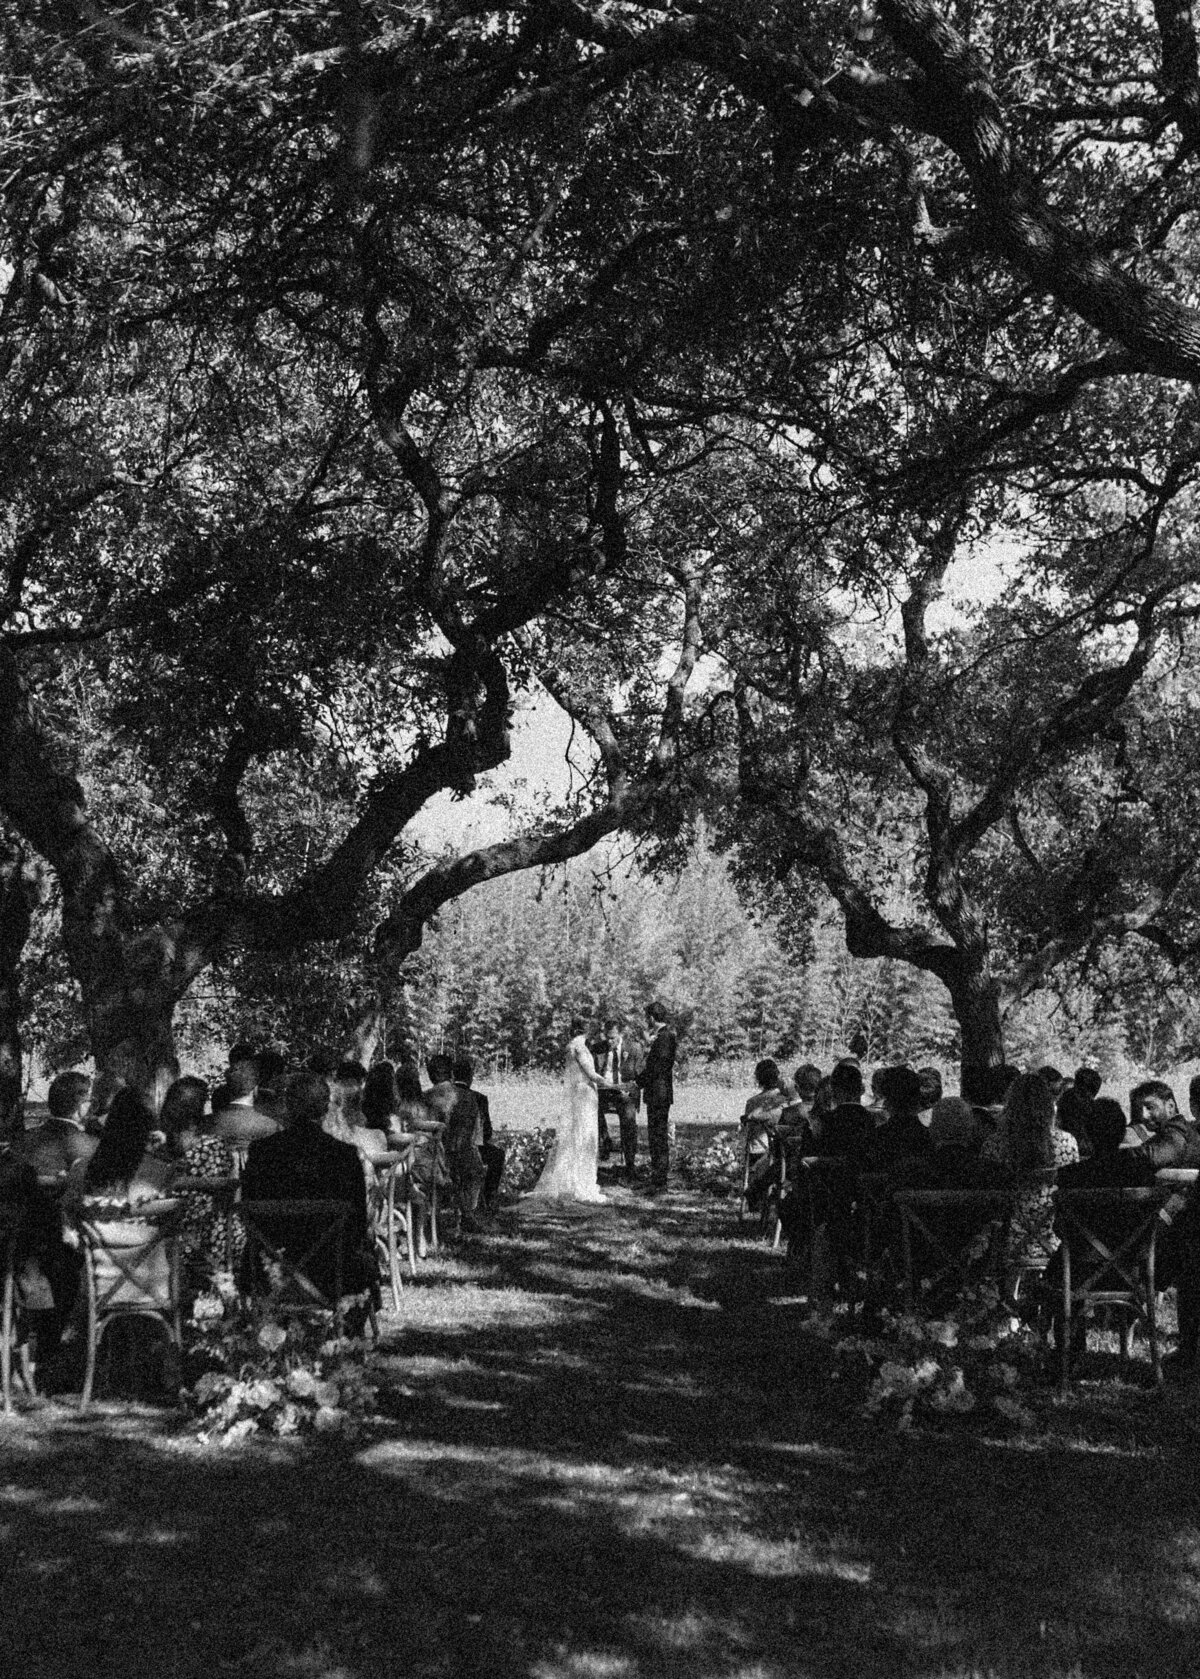 Wedding ceremony under the trees at  Mattie's Austin